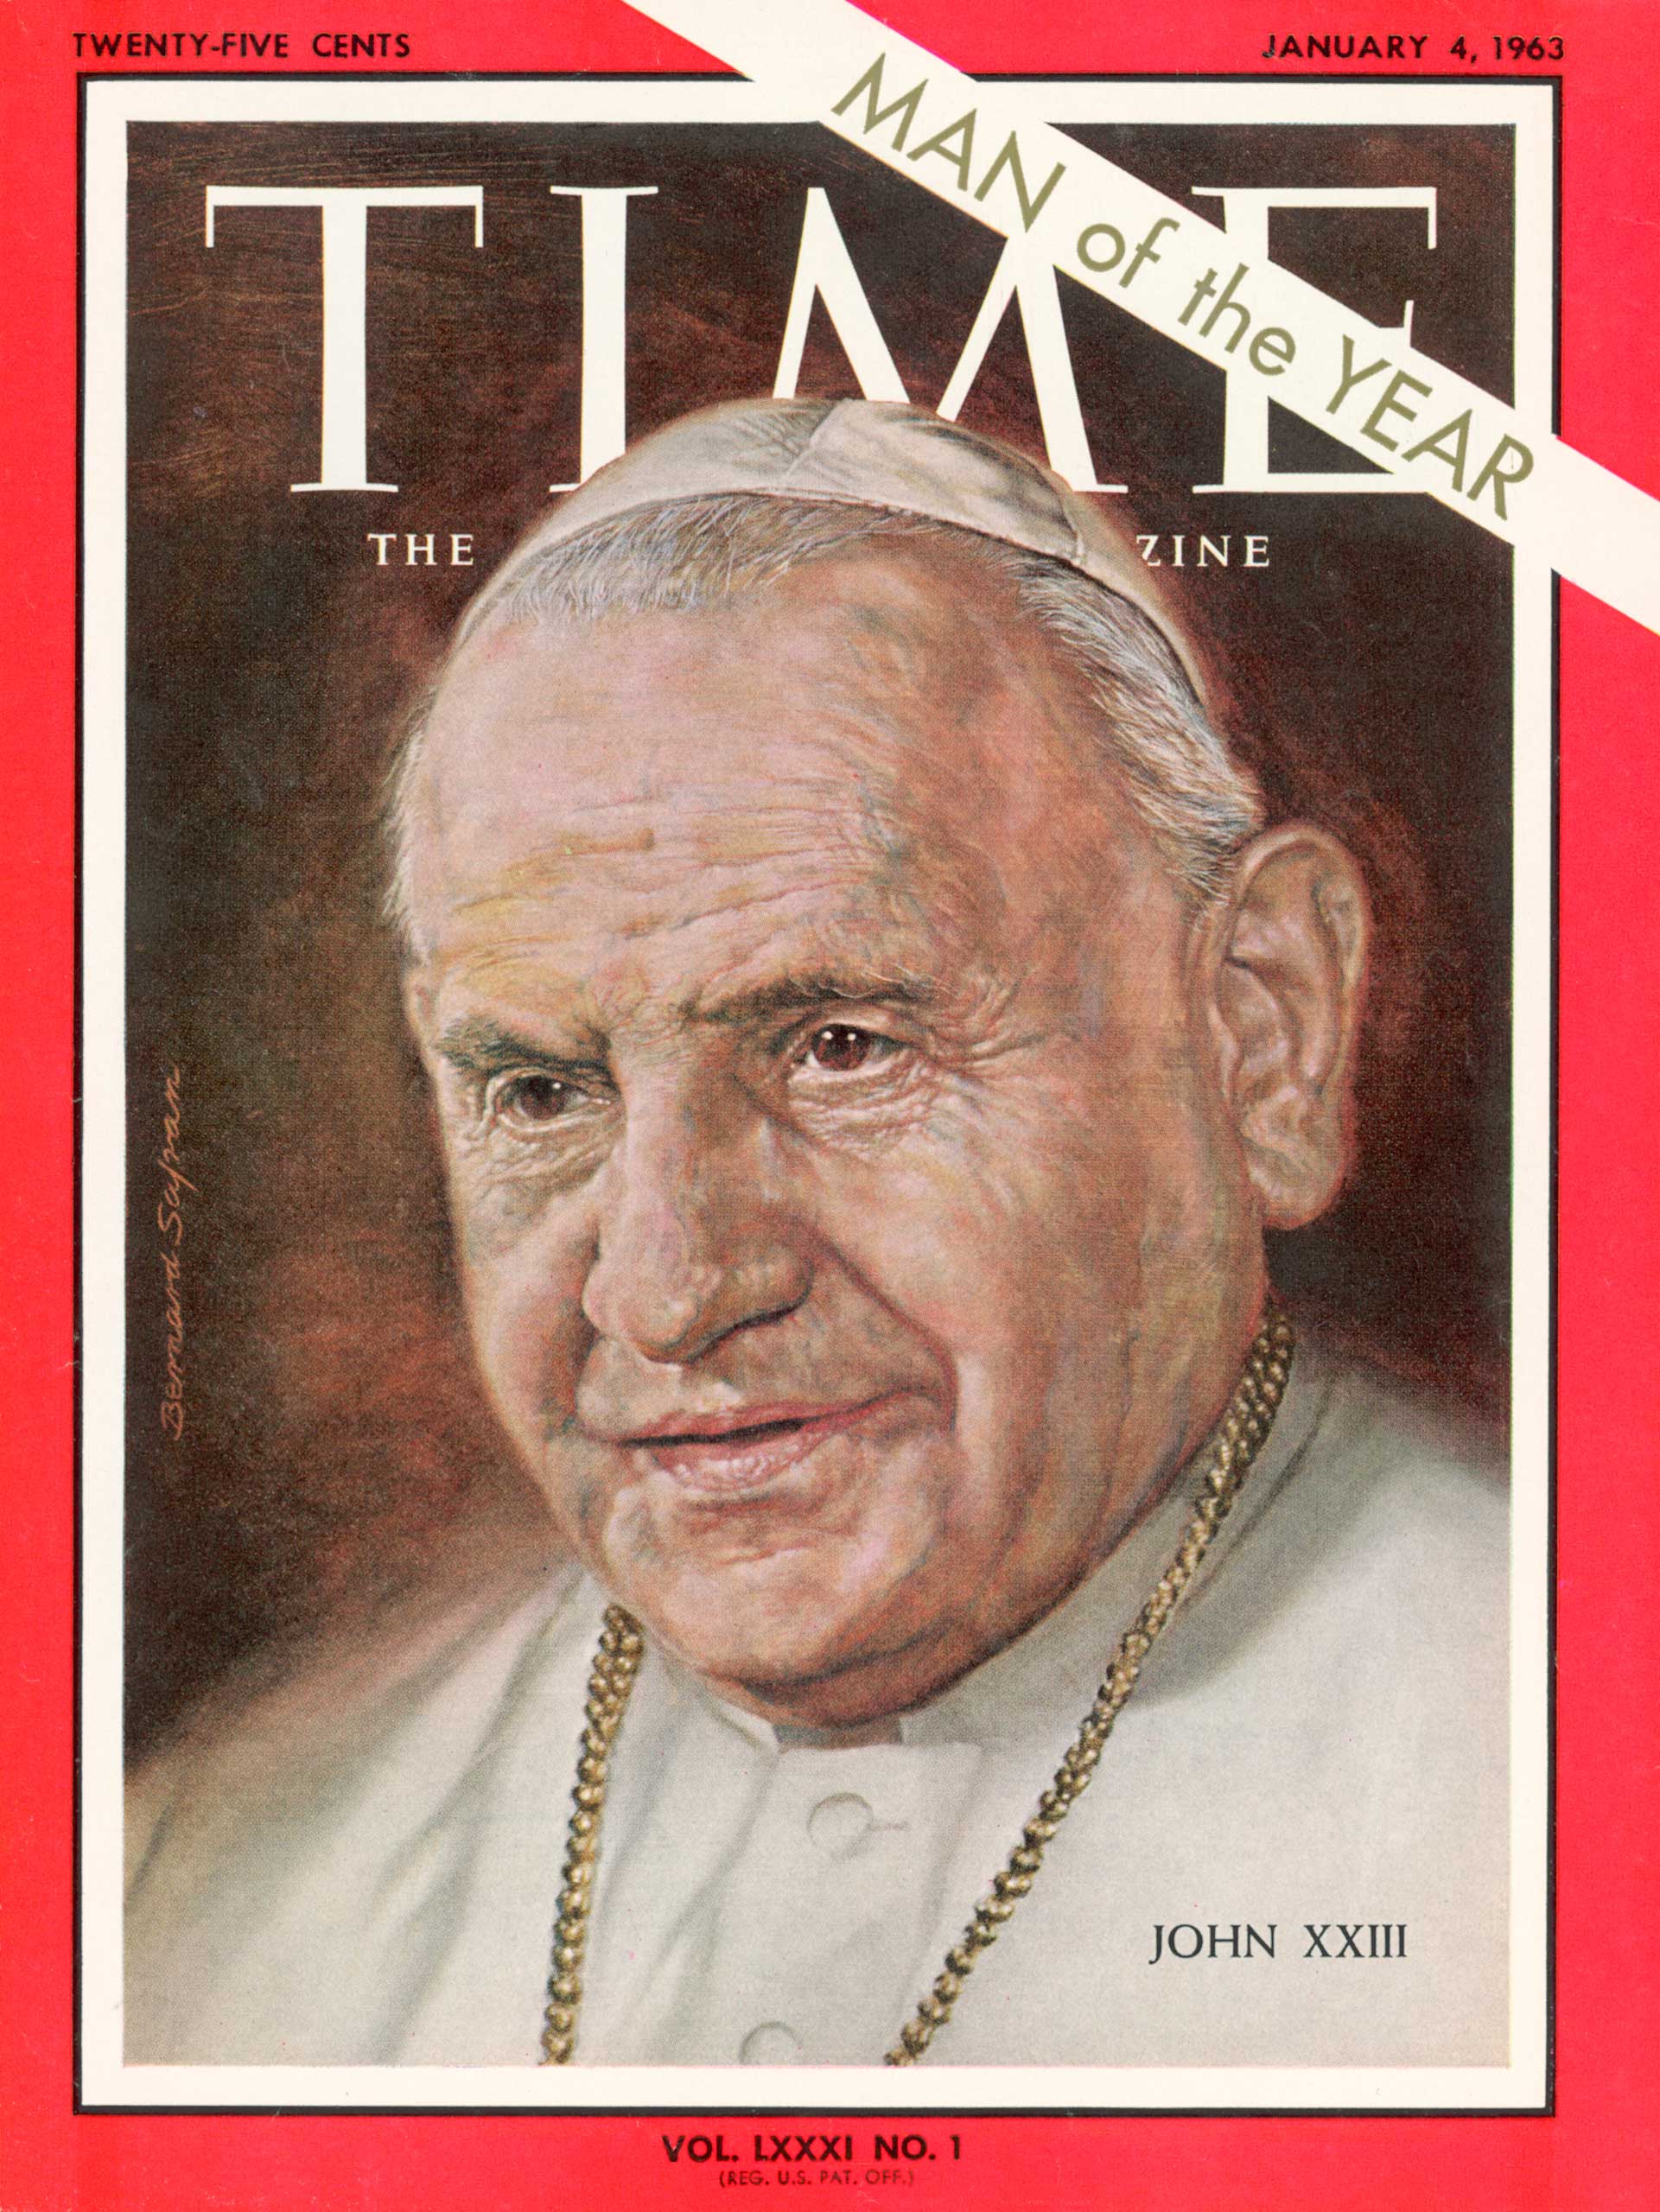 1962: Pope John XXIII